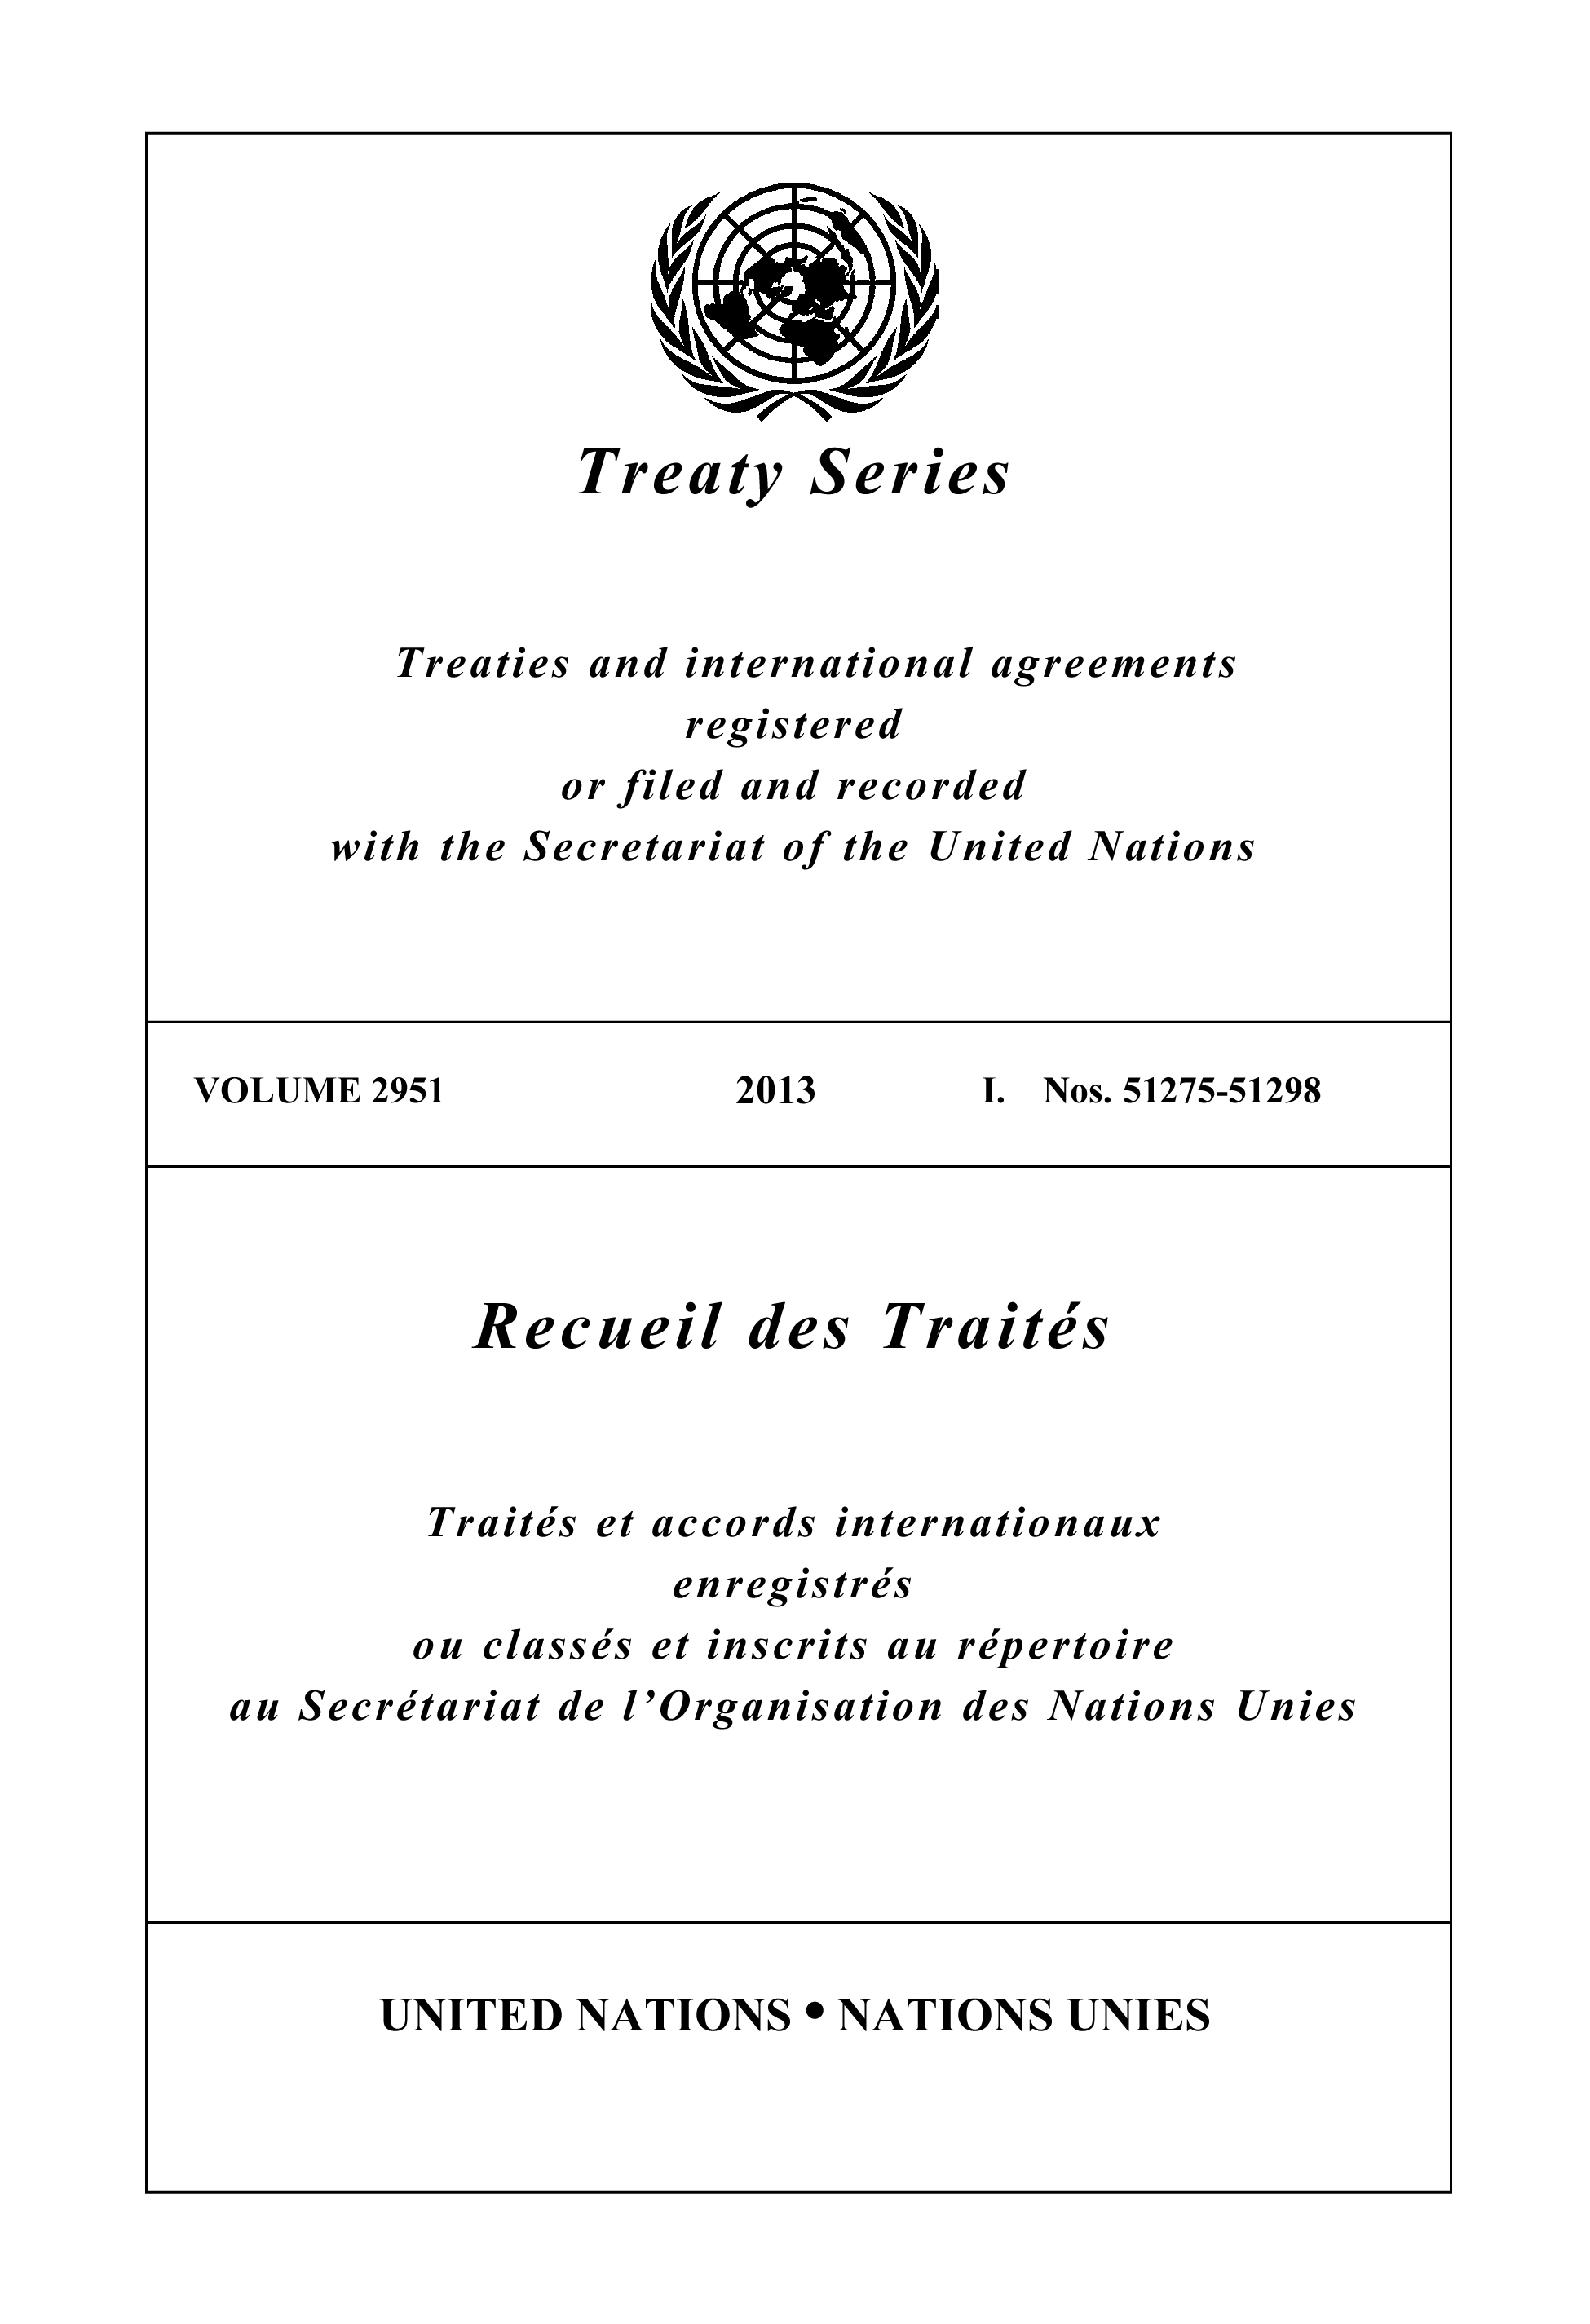 image of Treaty Series 2951